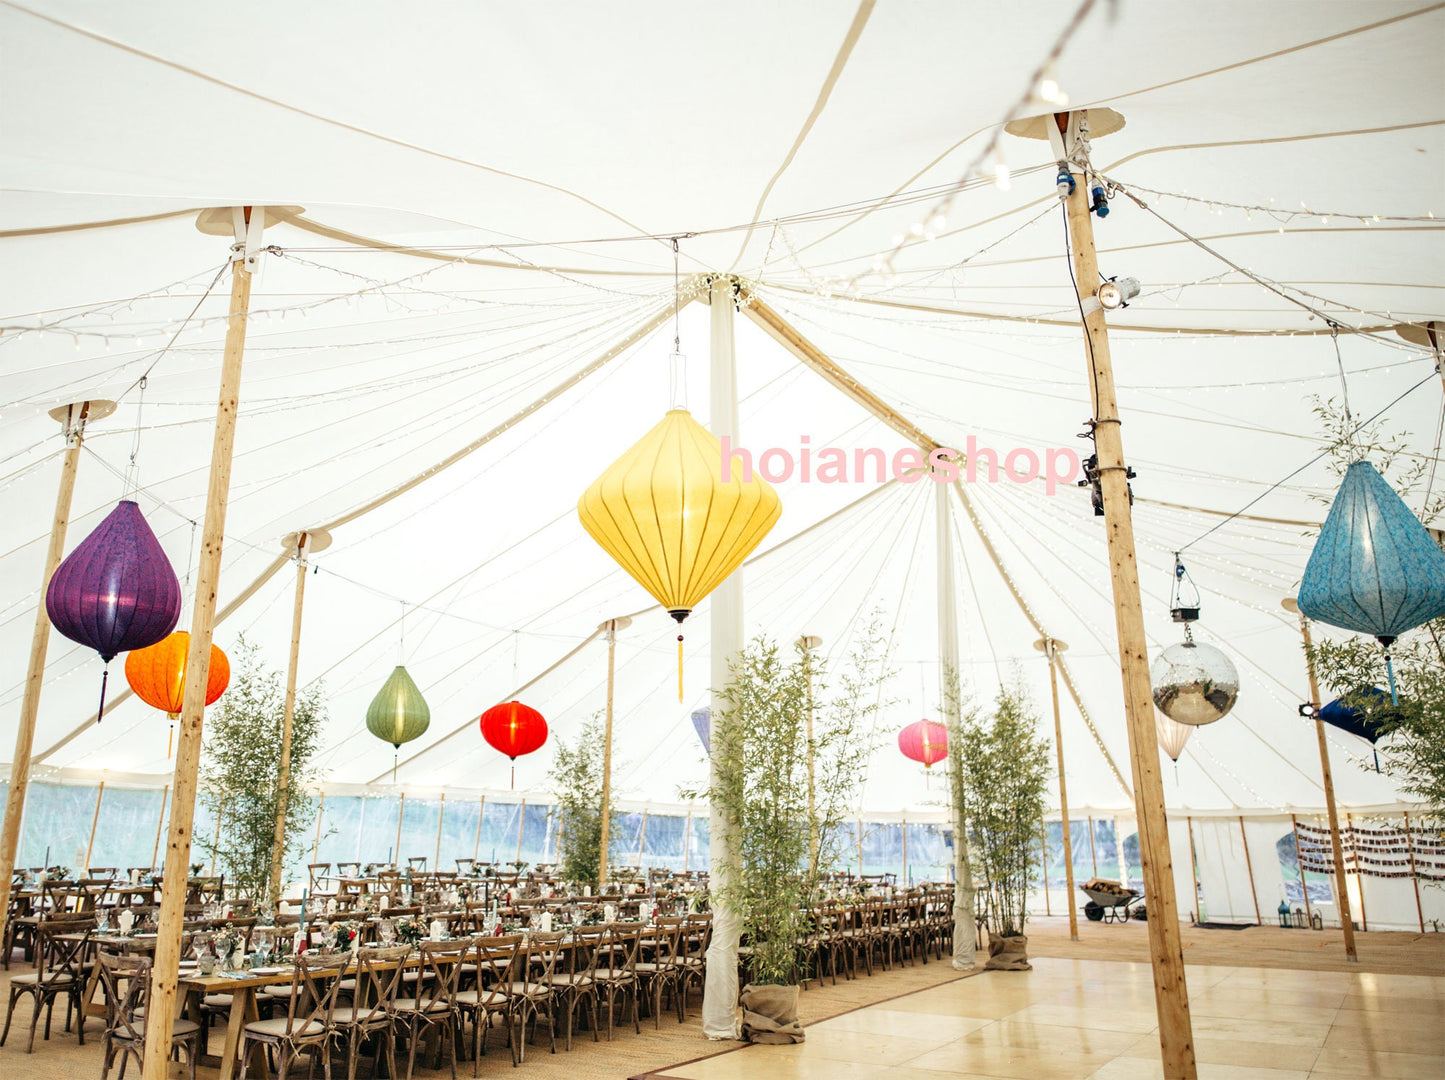 2 Pcs Large Lanterns For Wedding Party Decorative Big Lanterns For Festival Events Decor Wedding Tent Dcor 90cm